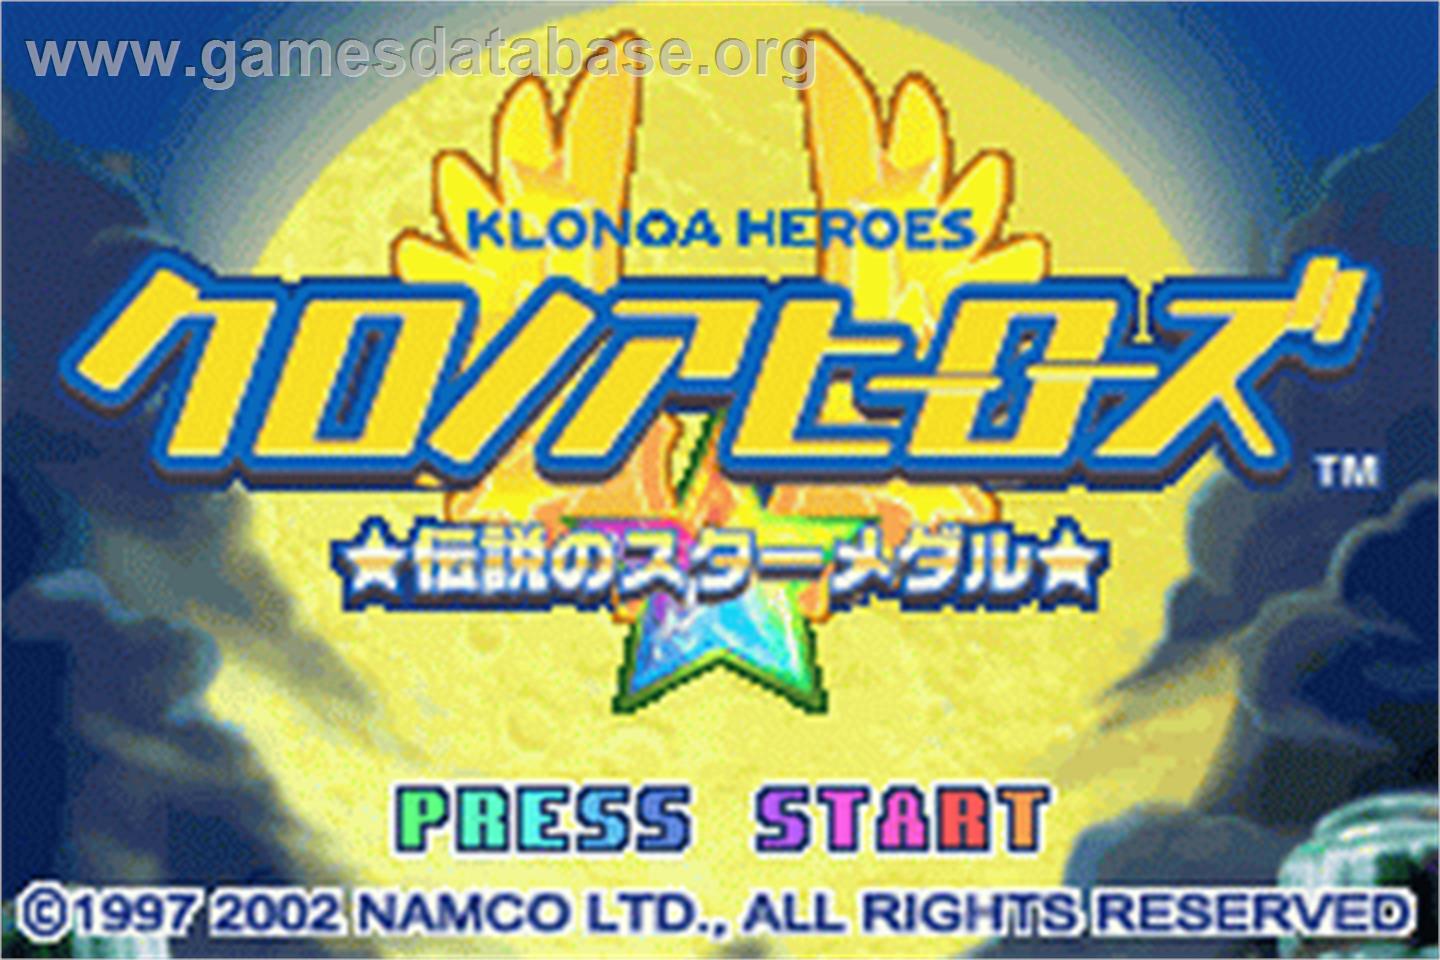 Klonoa Heroes: Densetsu no Star Medal - Nintendo Game Boy Advance - Artwork - Title Screen